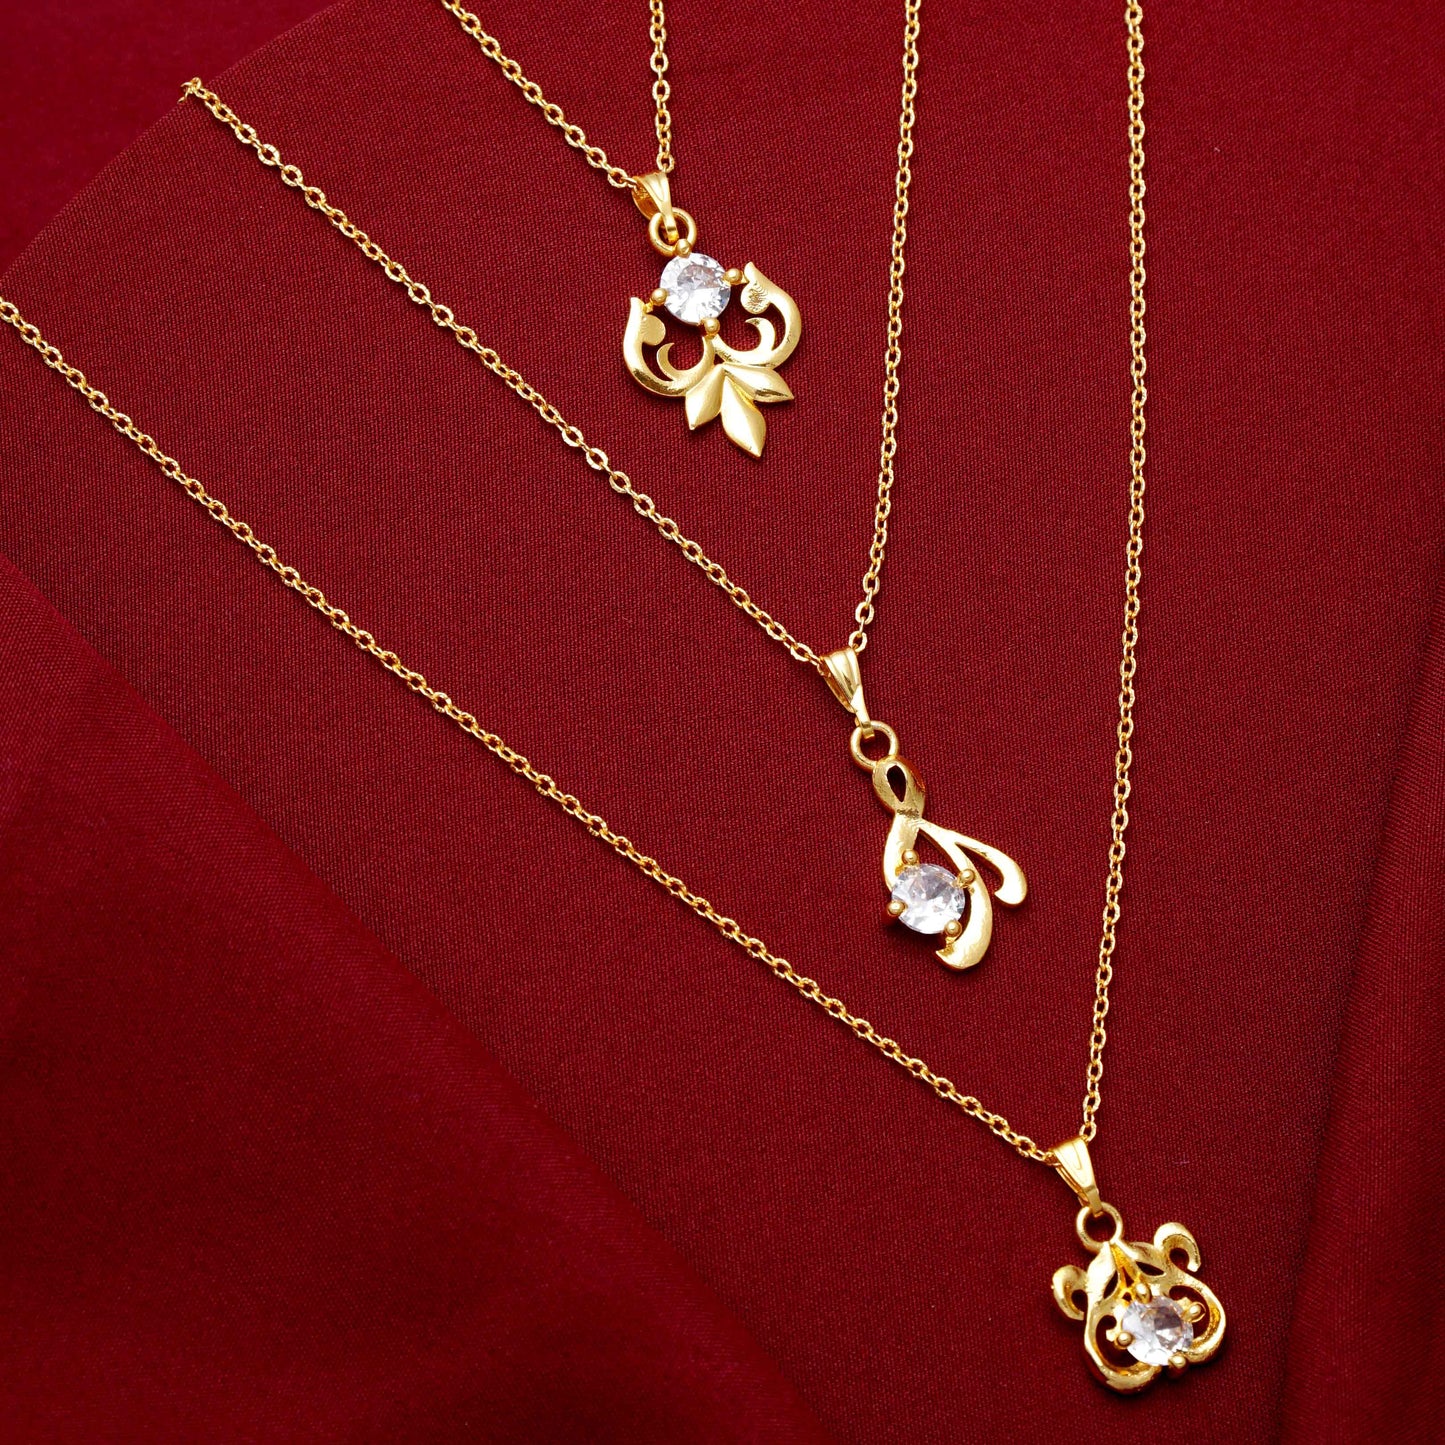 God Sikh Khanda Chain Pendant (Pendant with Chain) for Men & Women Pure Gold Plated Punjabi Symbol Chain Locket